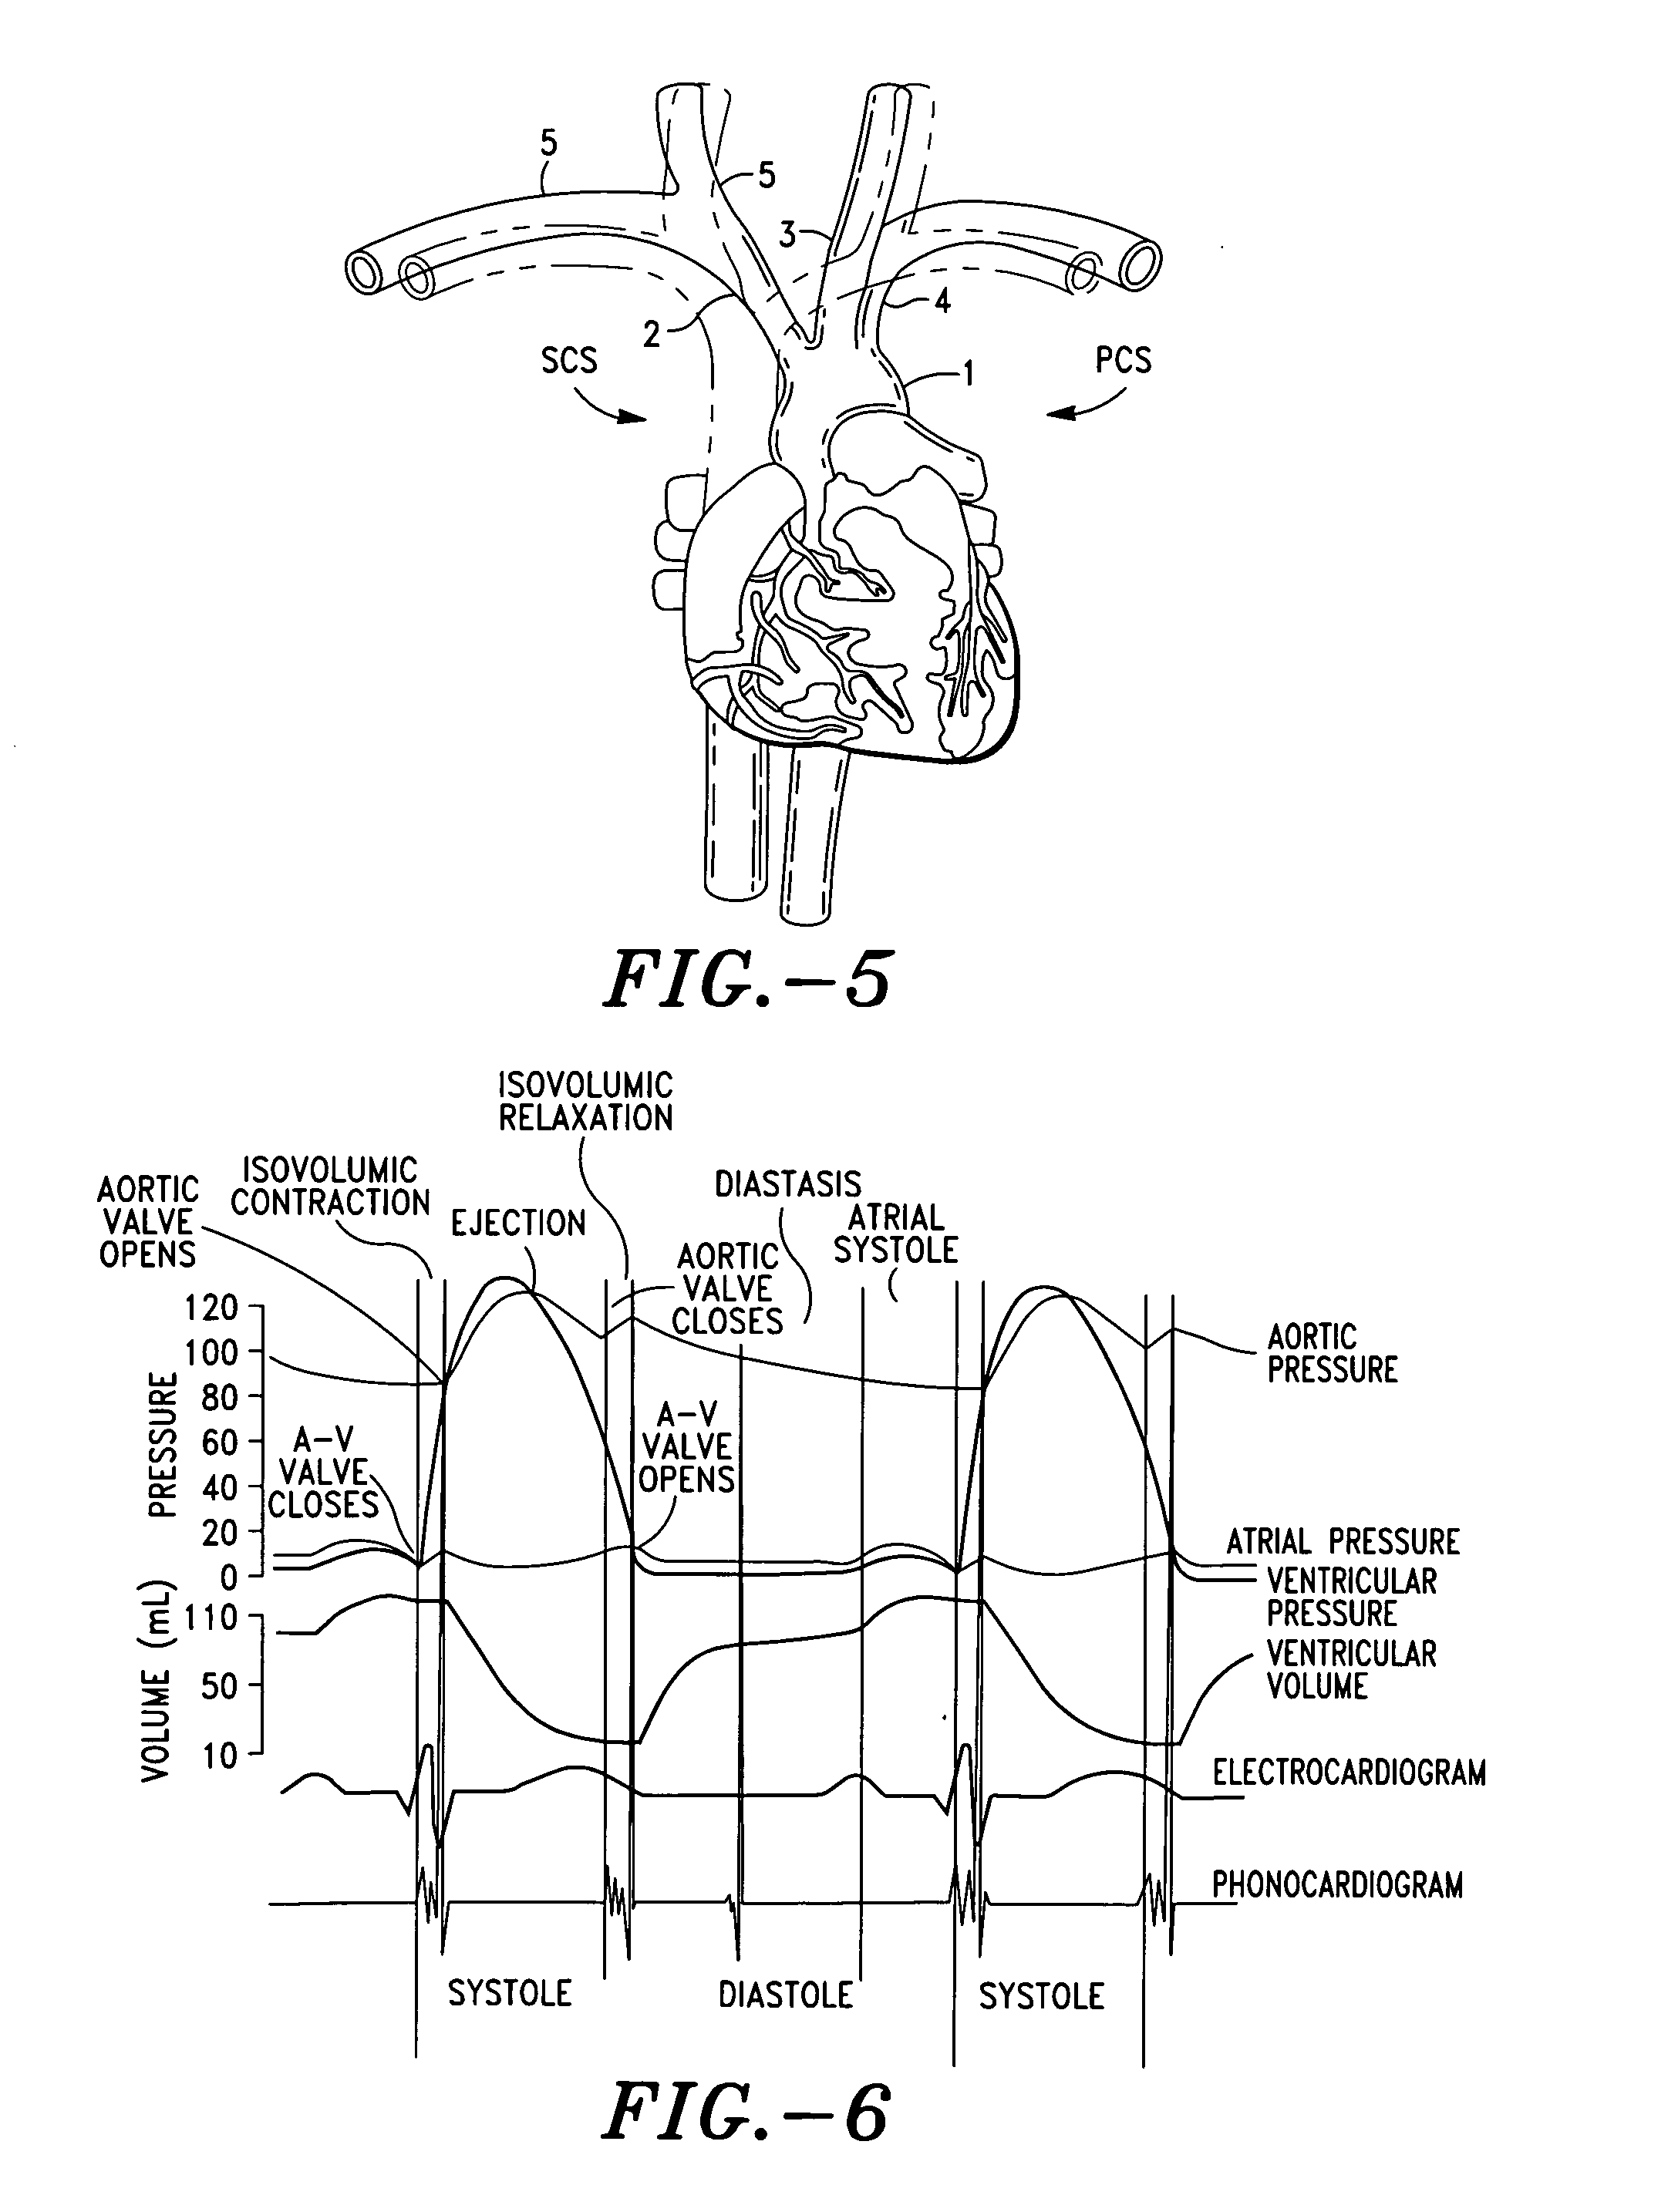 Method for determining a cardiac function